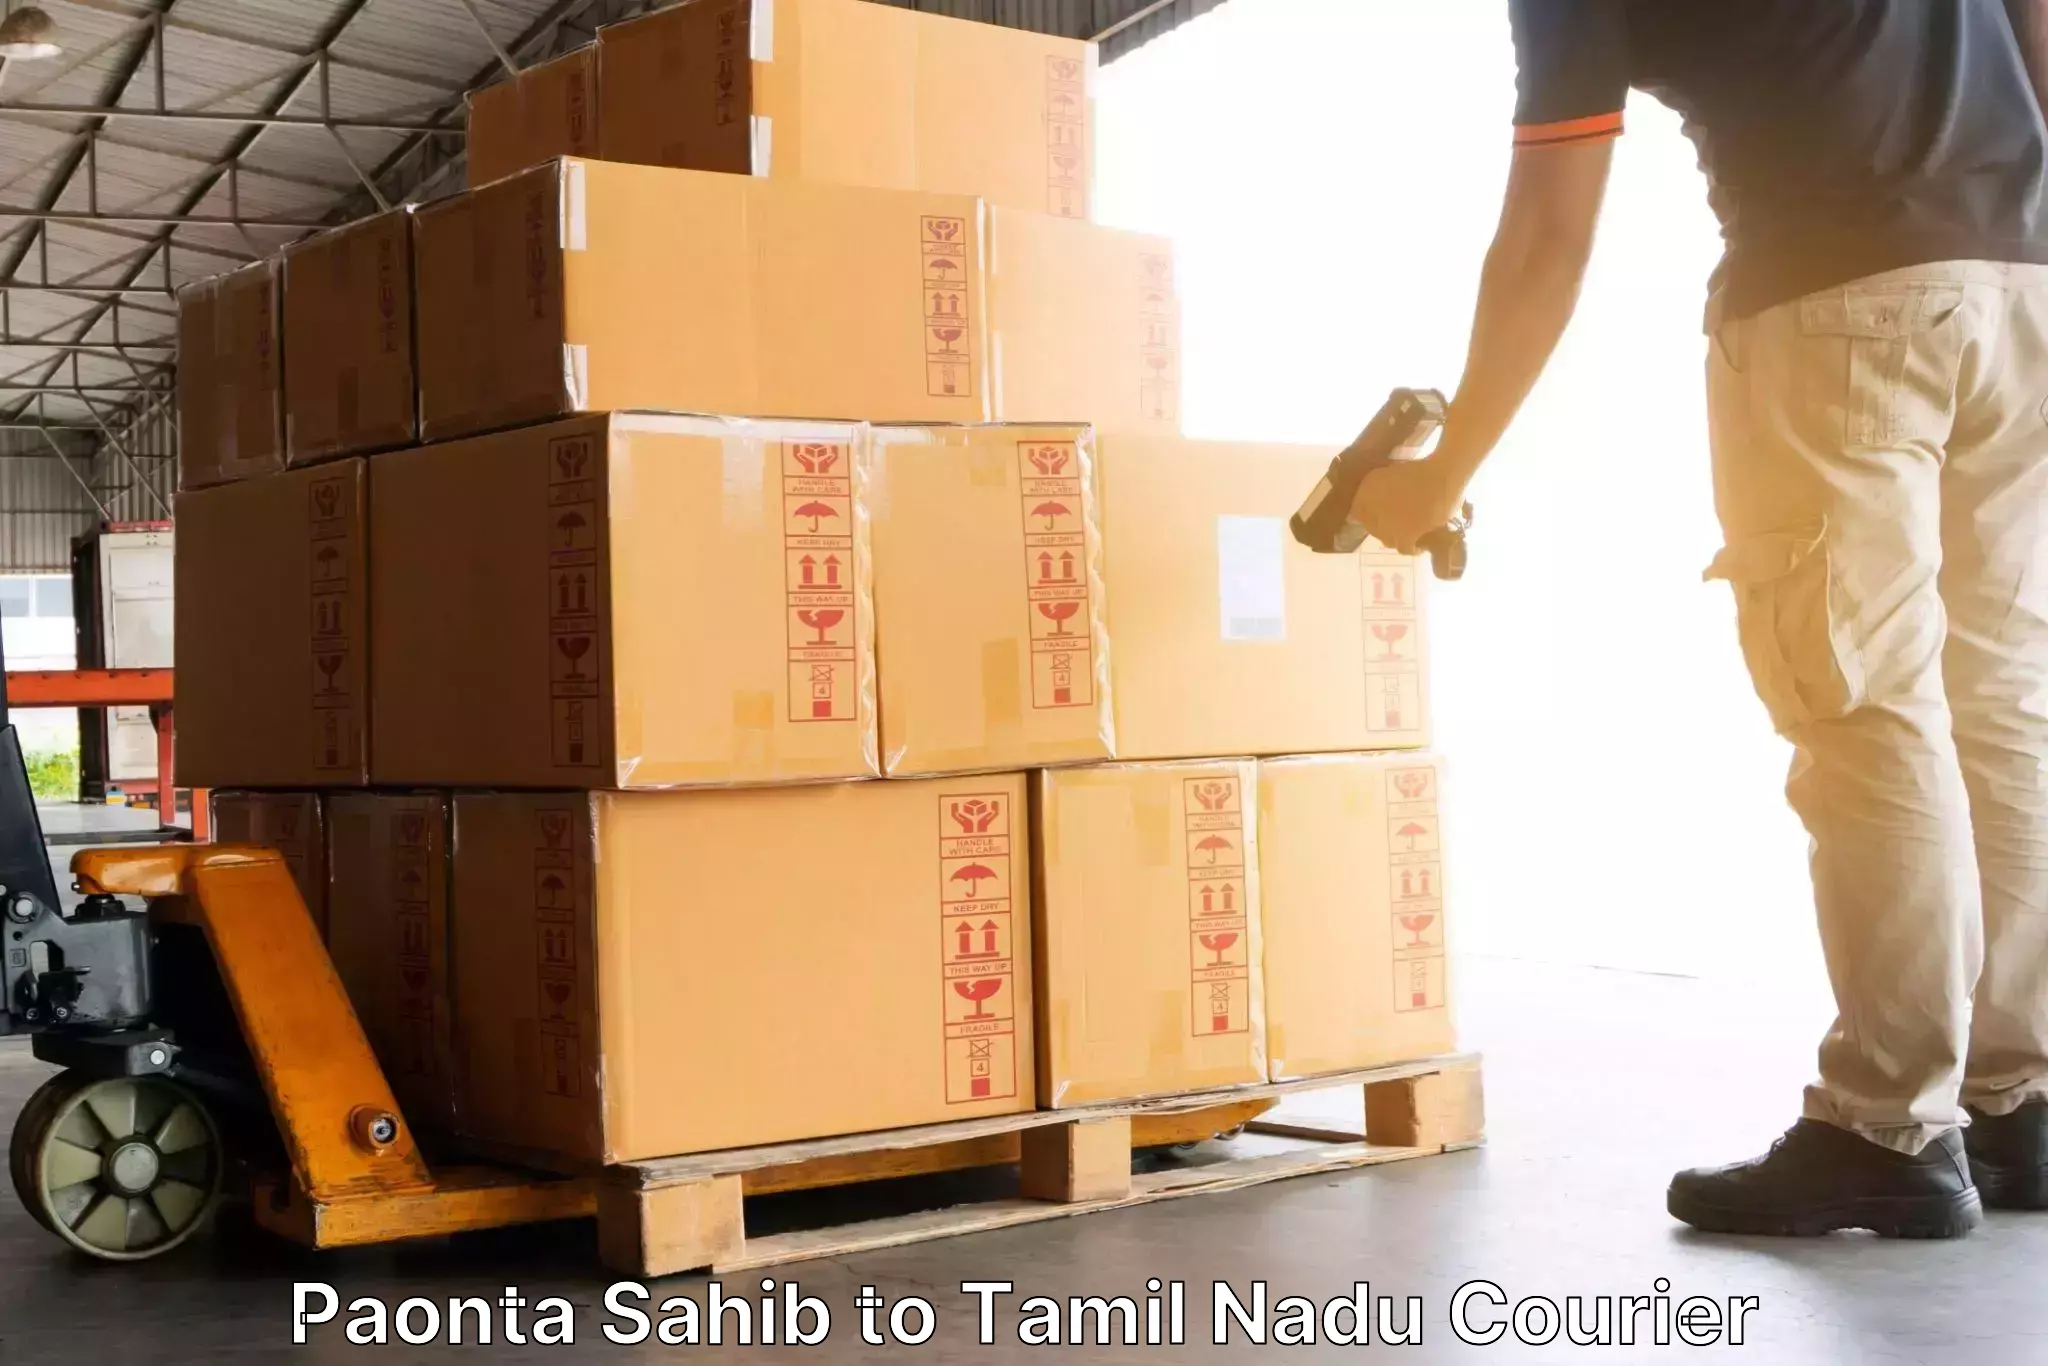 Courier service innovation Paonta Sahib to Tirupur